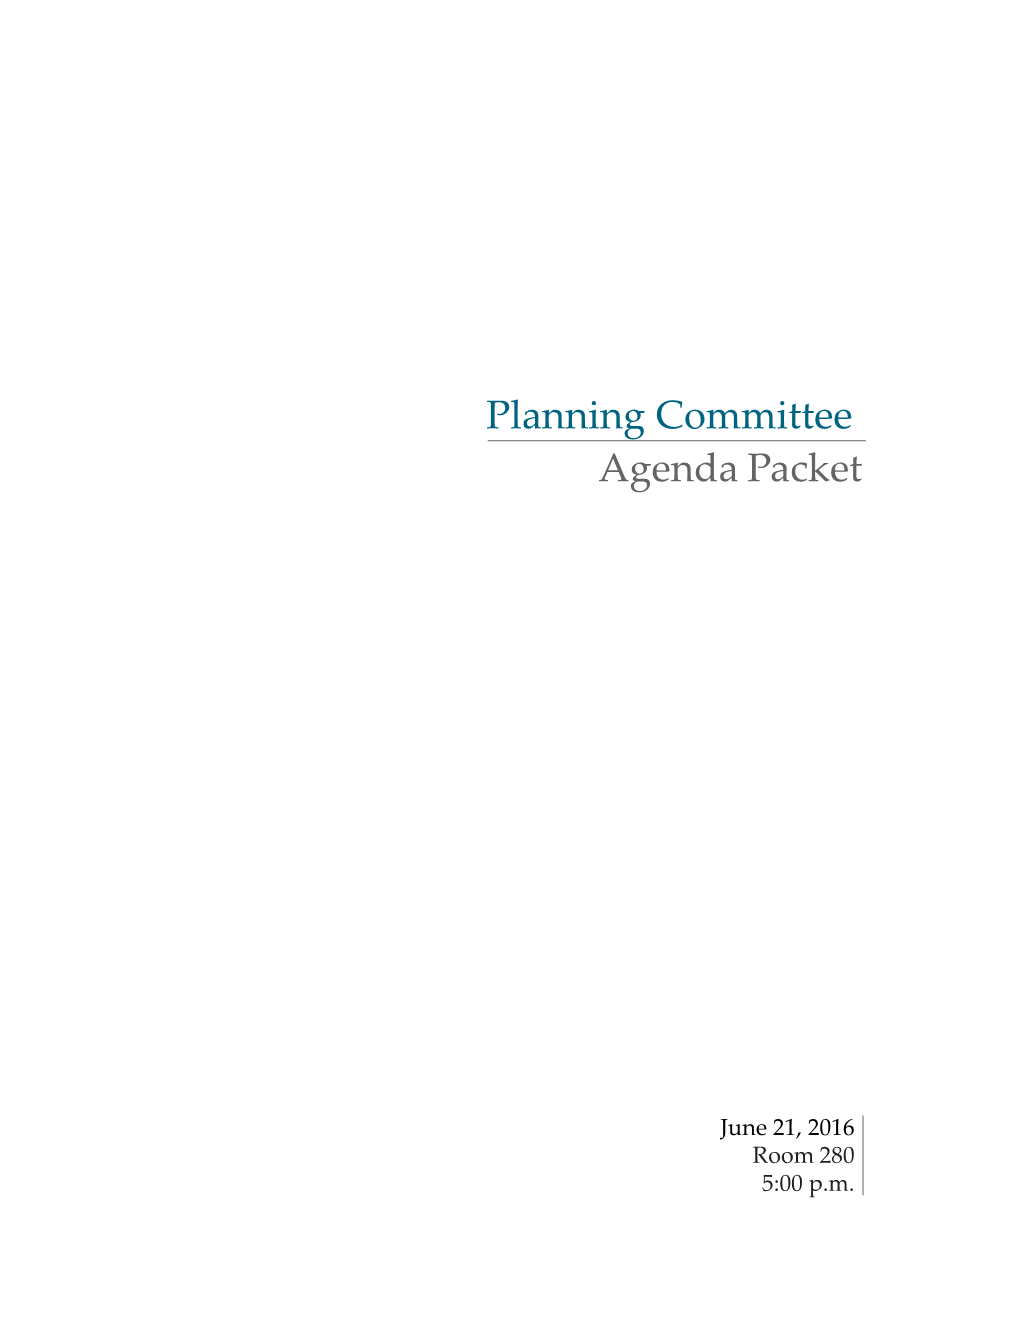 Planning Committee Agenda Packet